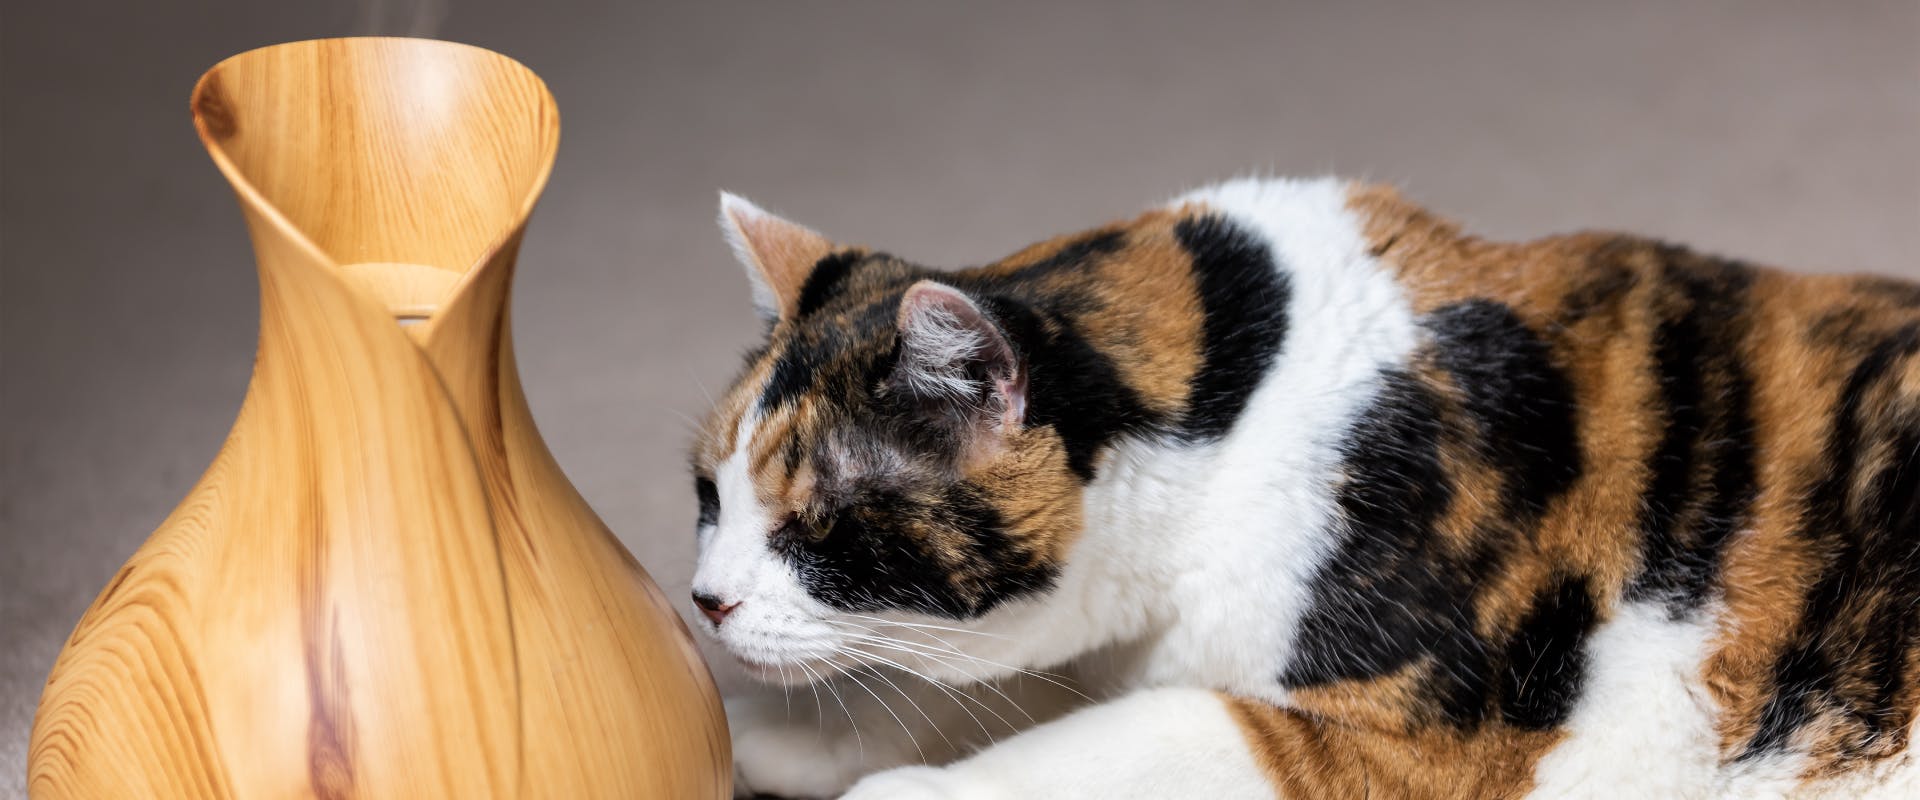 A cat sniffs at an essential oil diffuser.